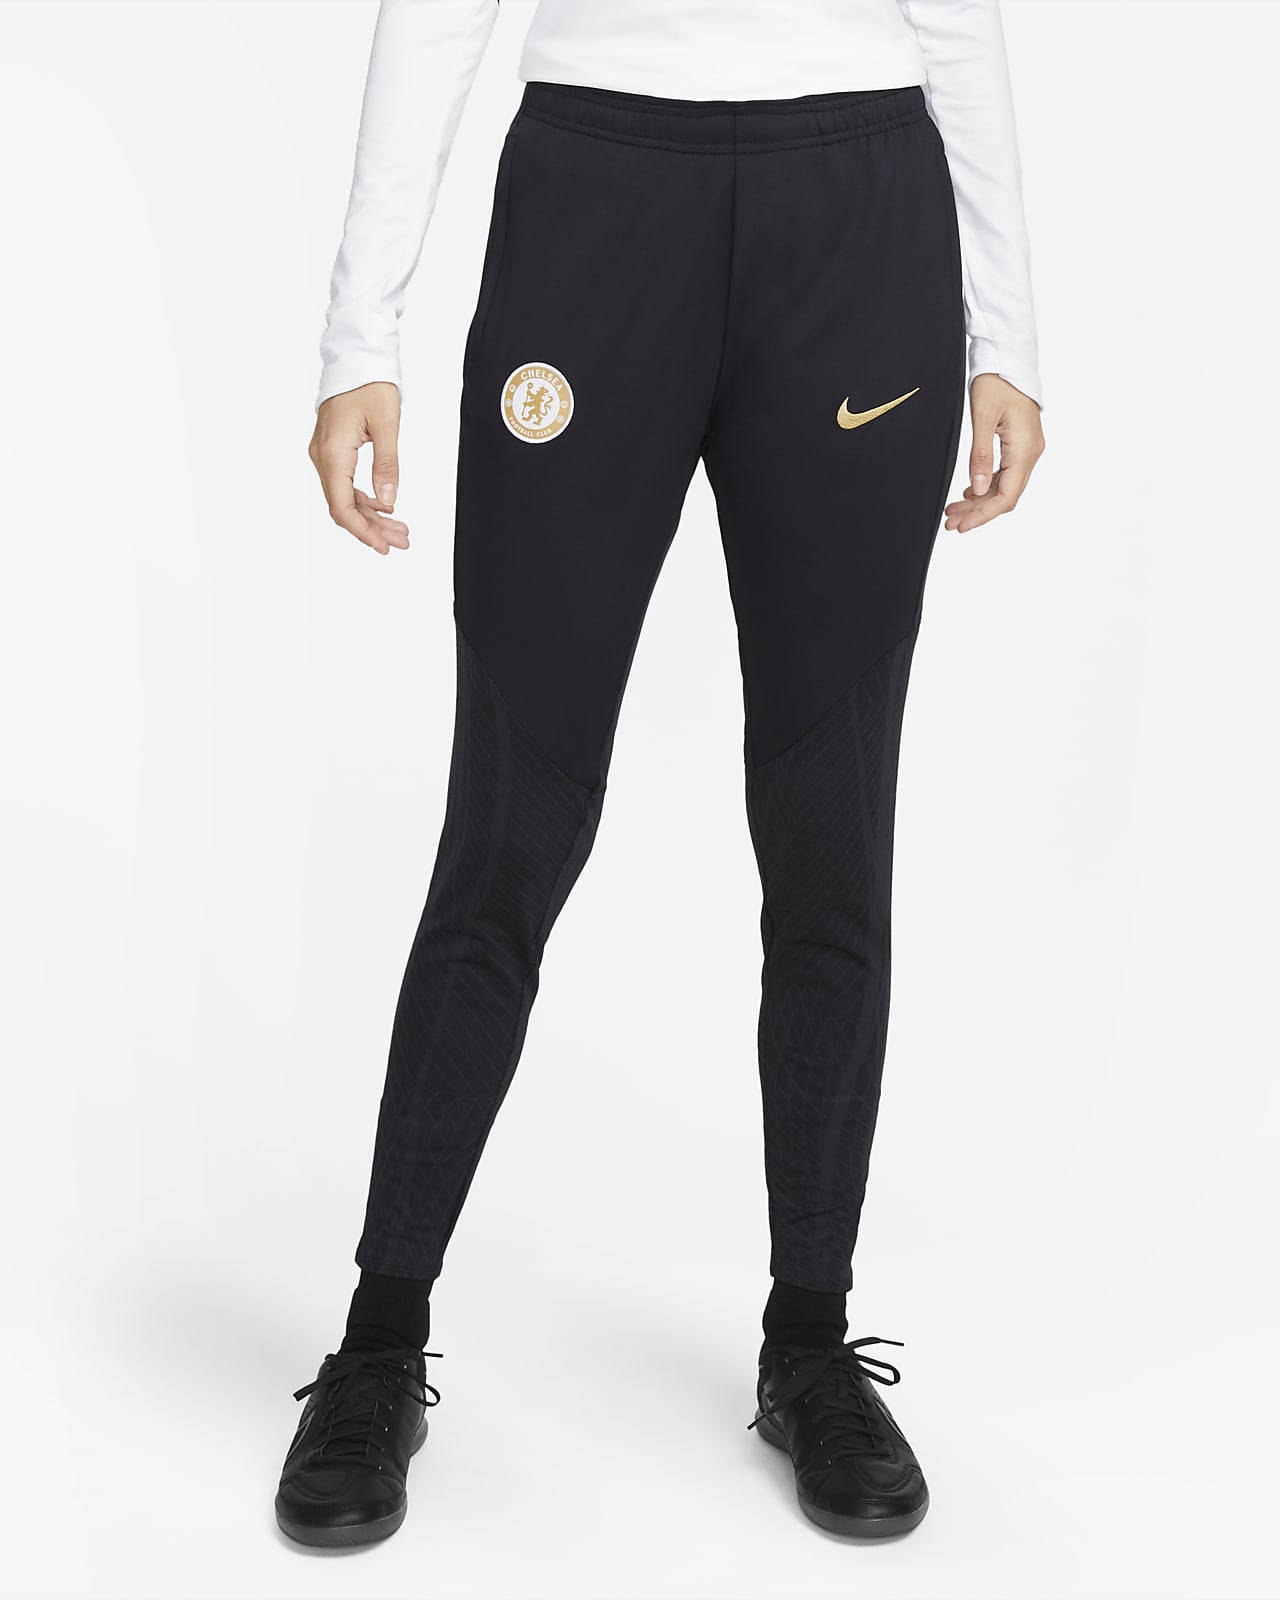 Women's Nike Dri-FIT Leggings. Nike CH